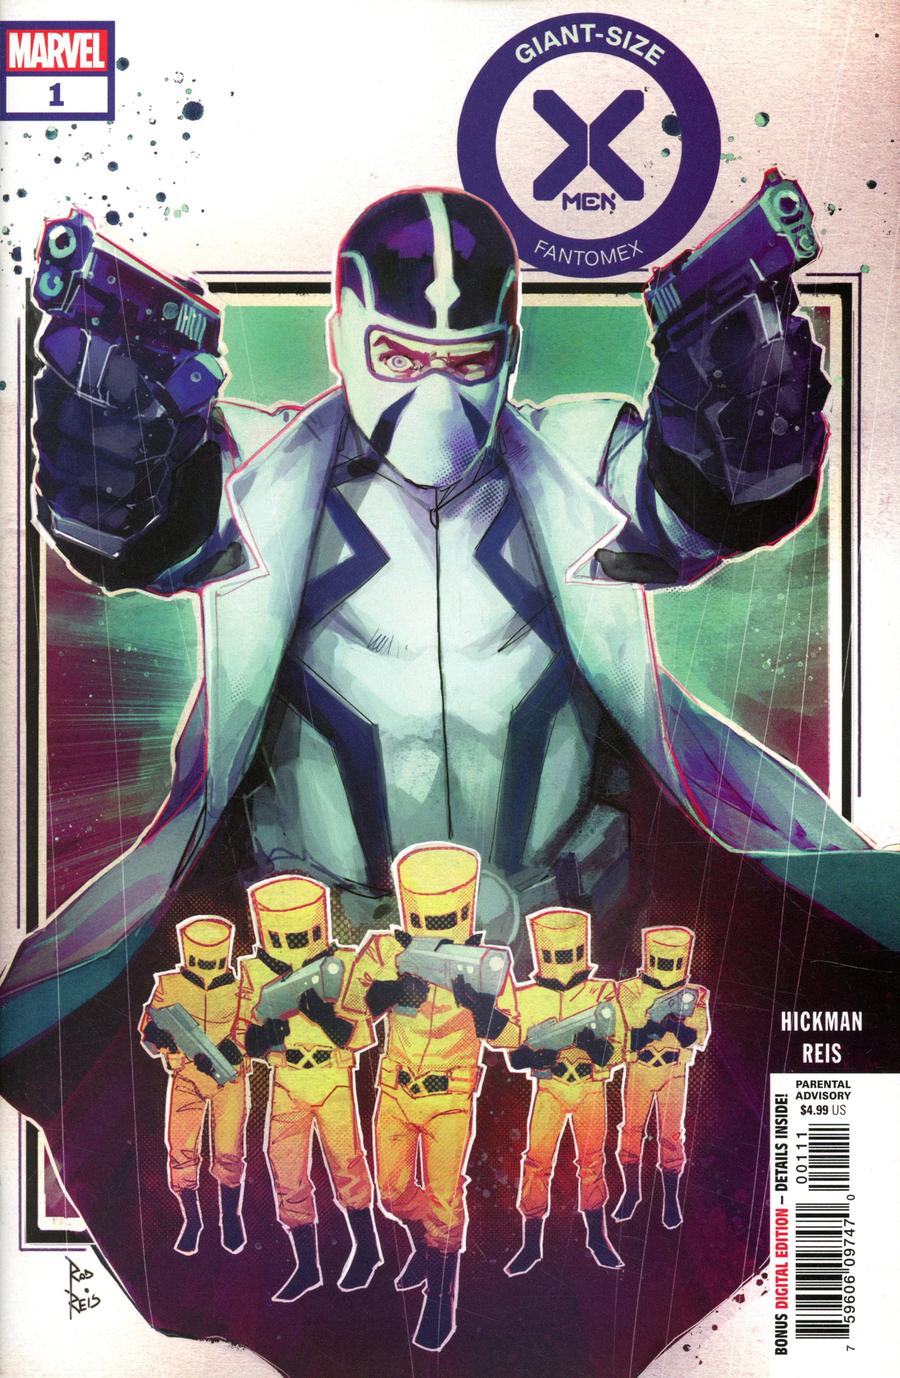 Giant-Size X-Men: Fantomex #1 (2020)